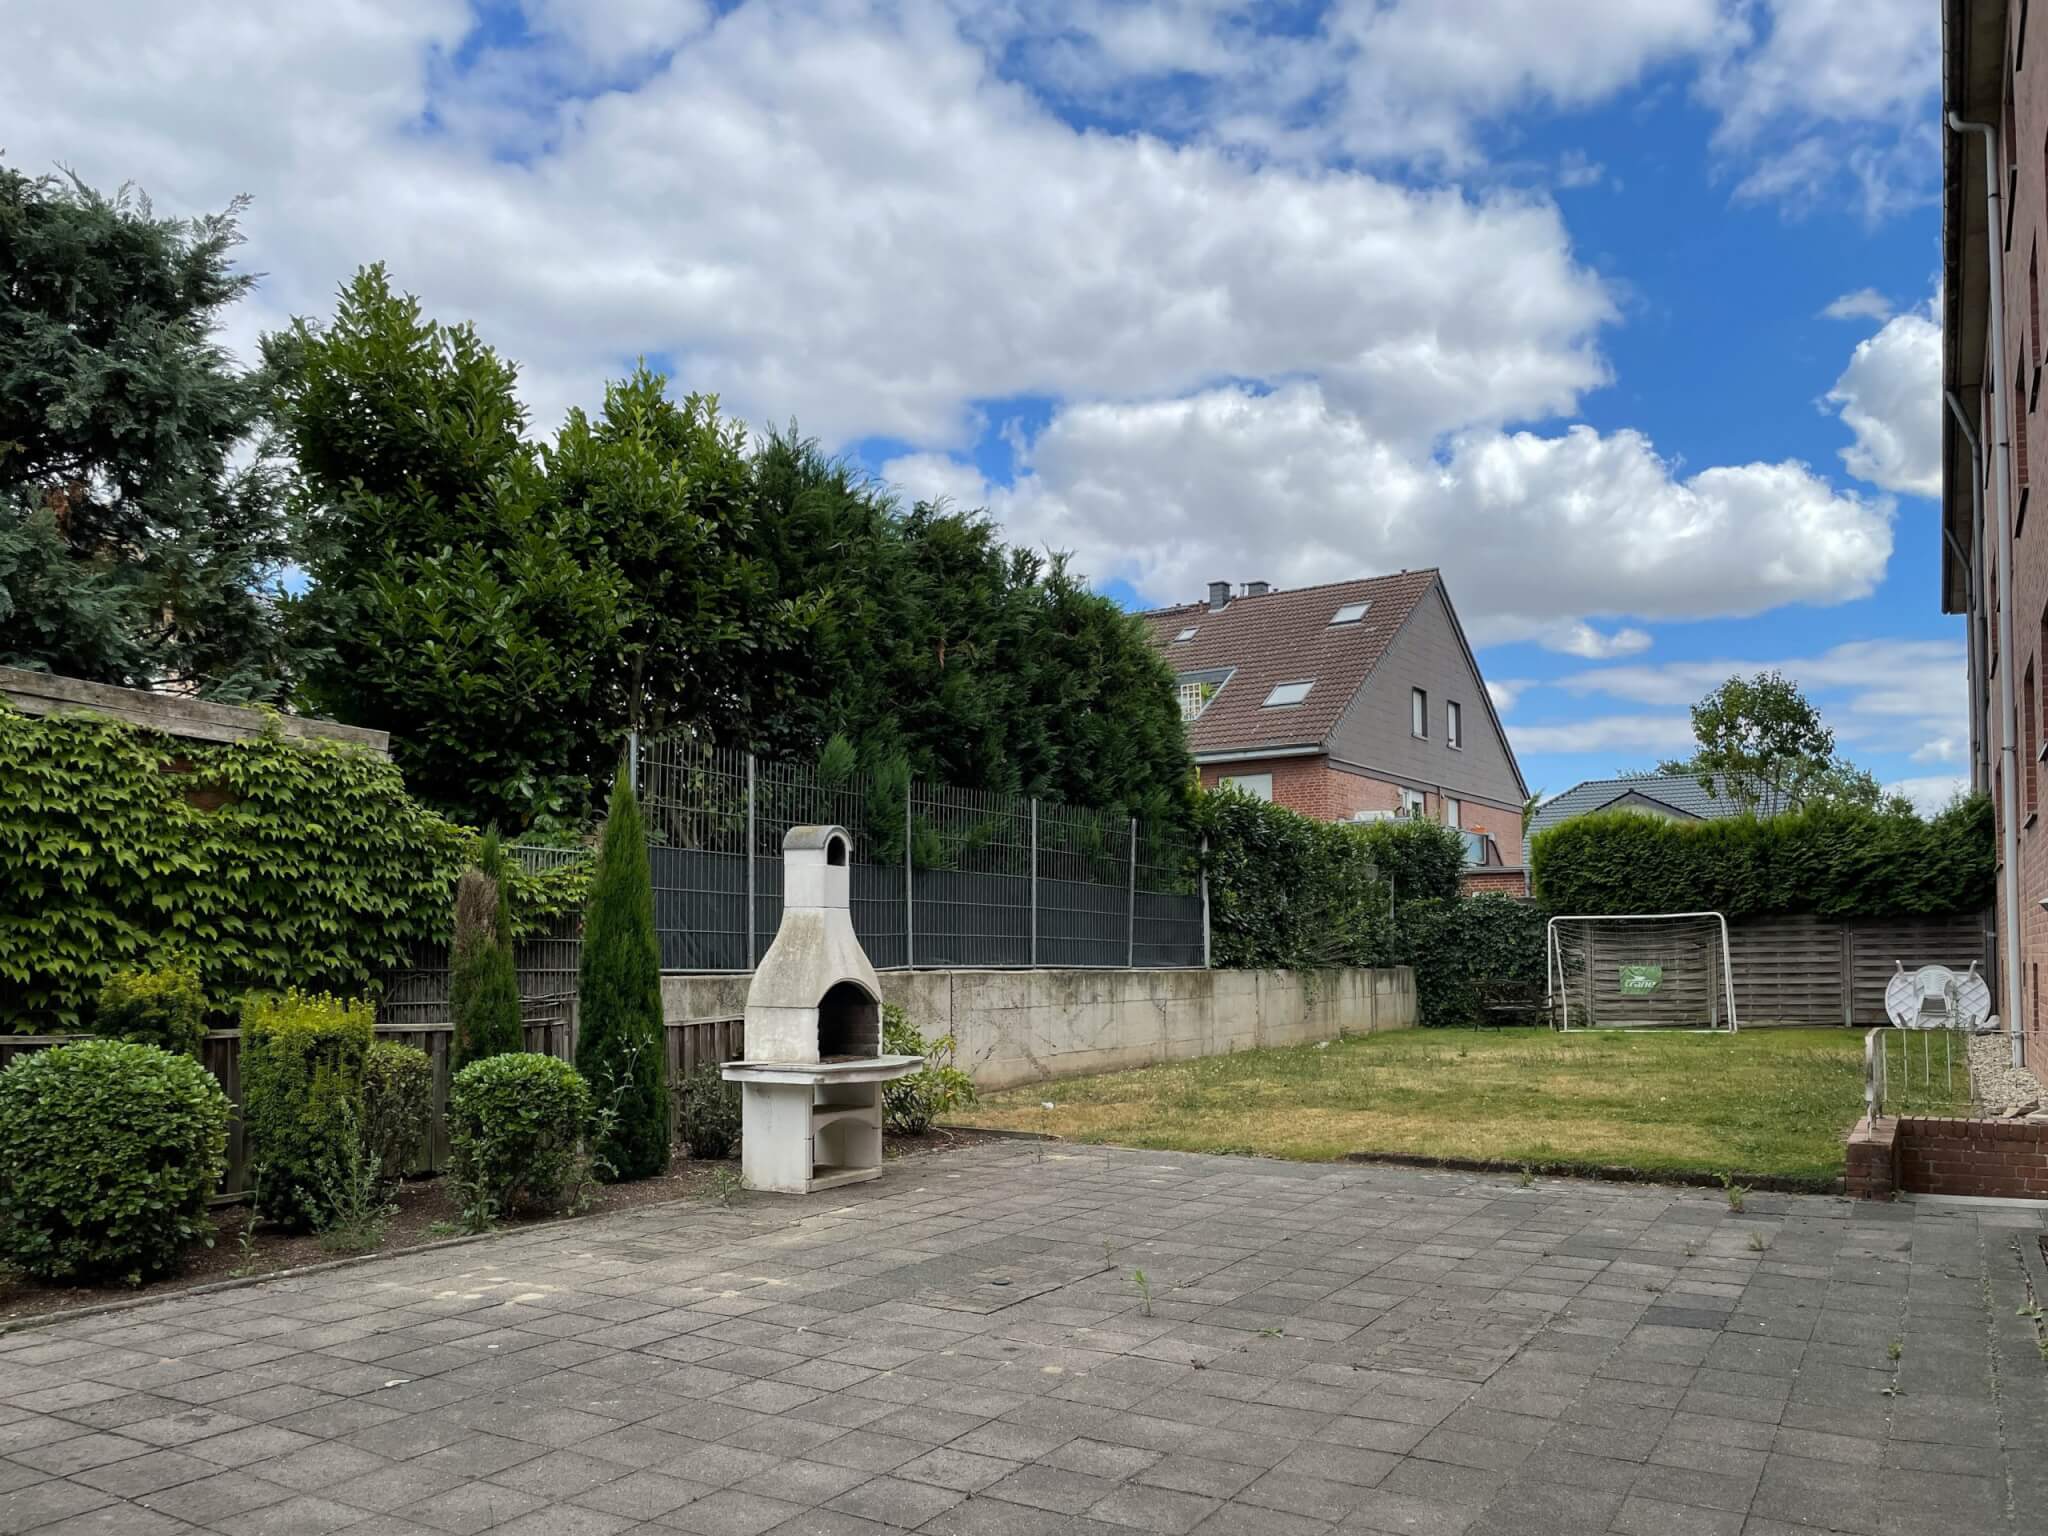 Souterrain Wohnung in Baesweiler-Setterich zu vermieten über Koch Immobilien GmbH